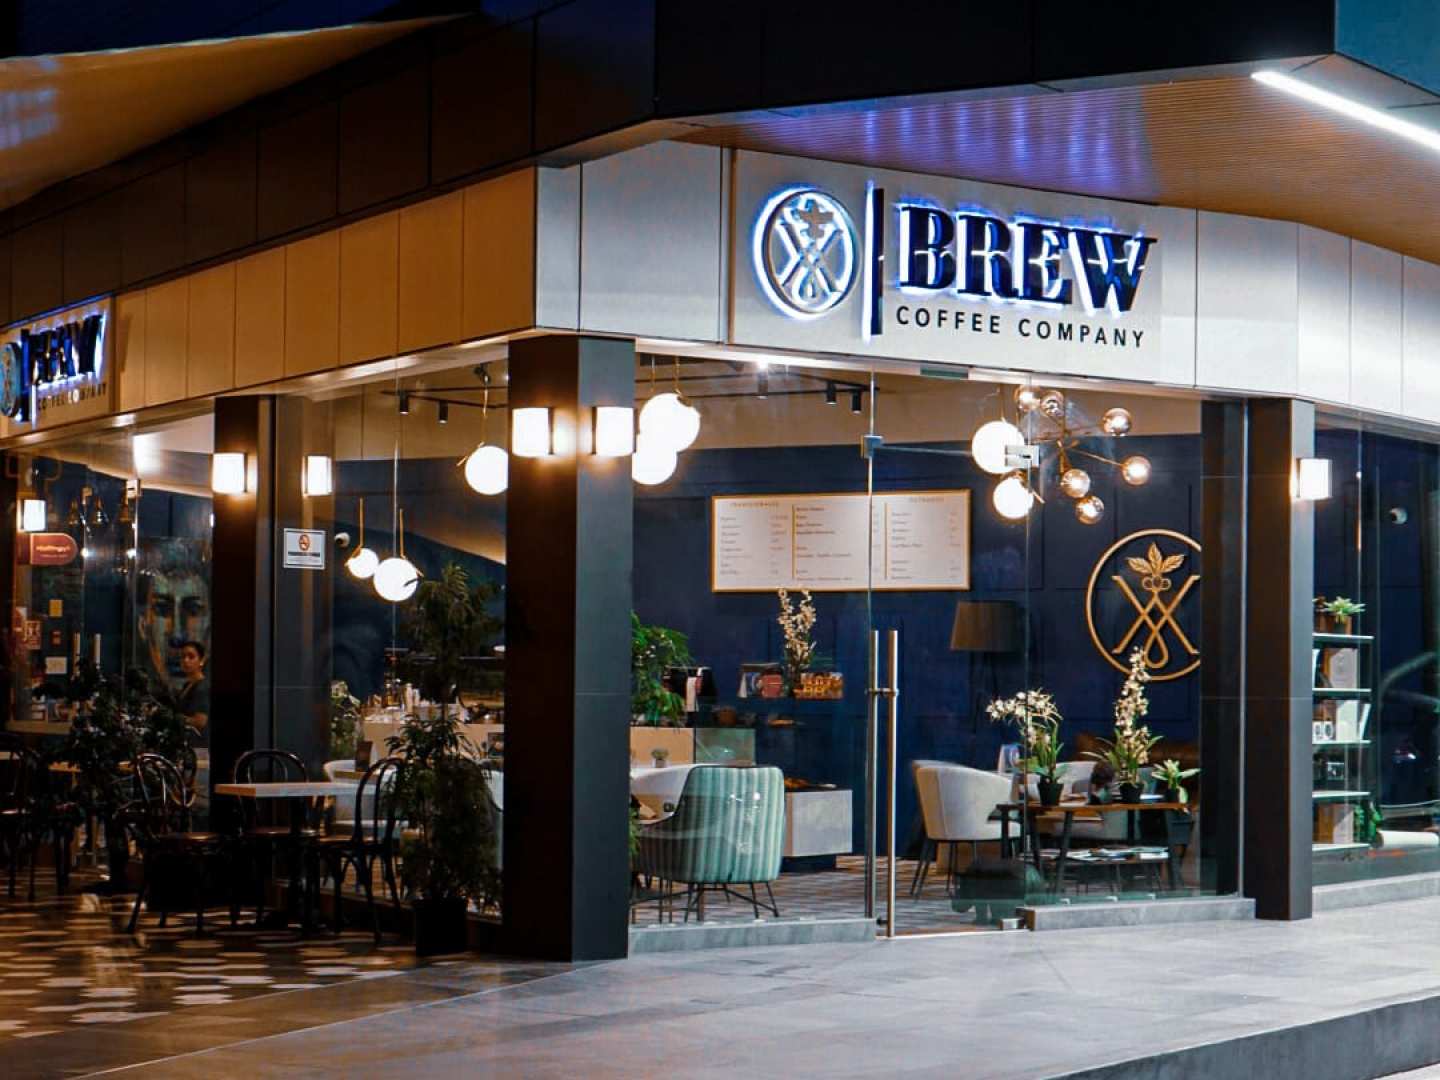 Brew Coffee Company